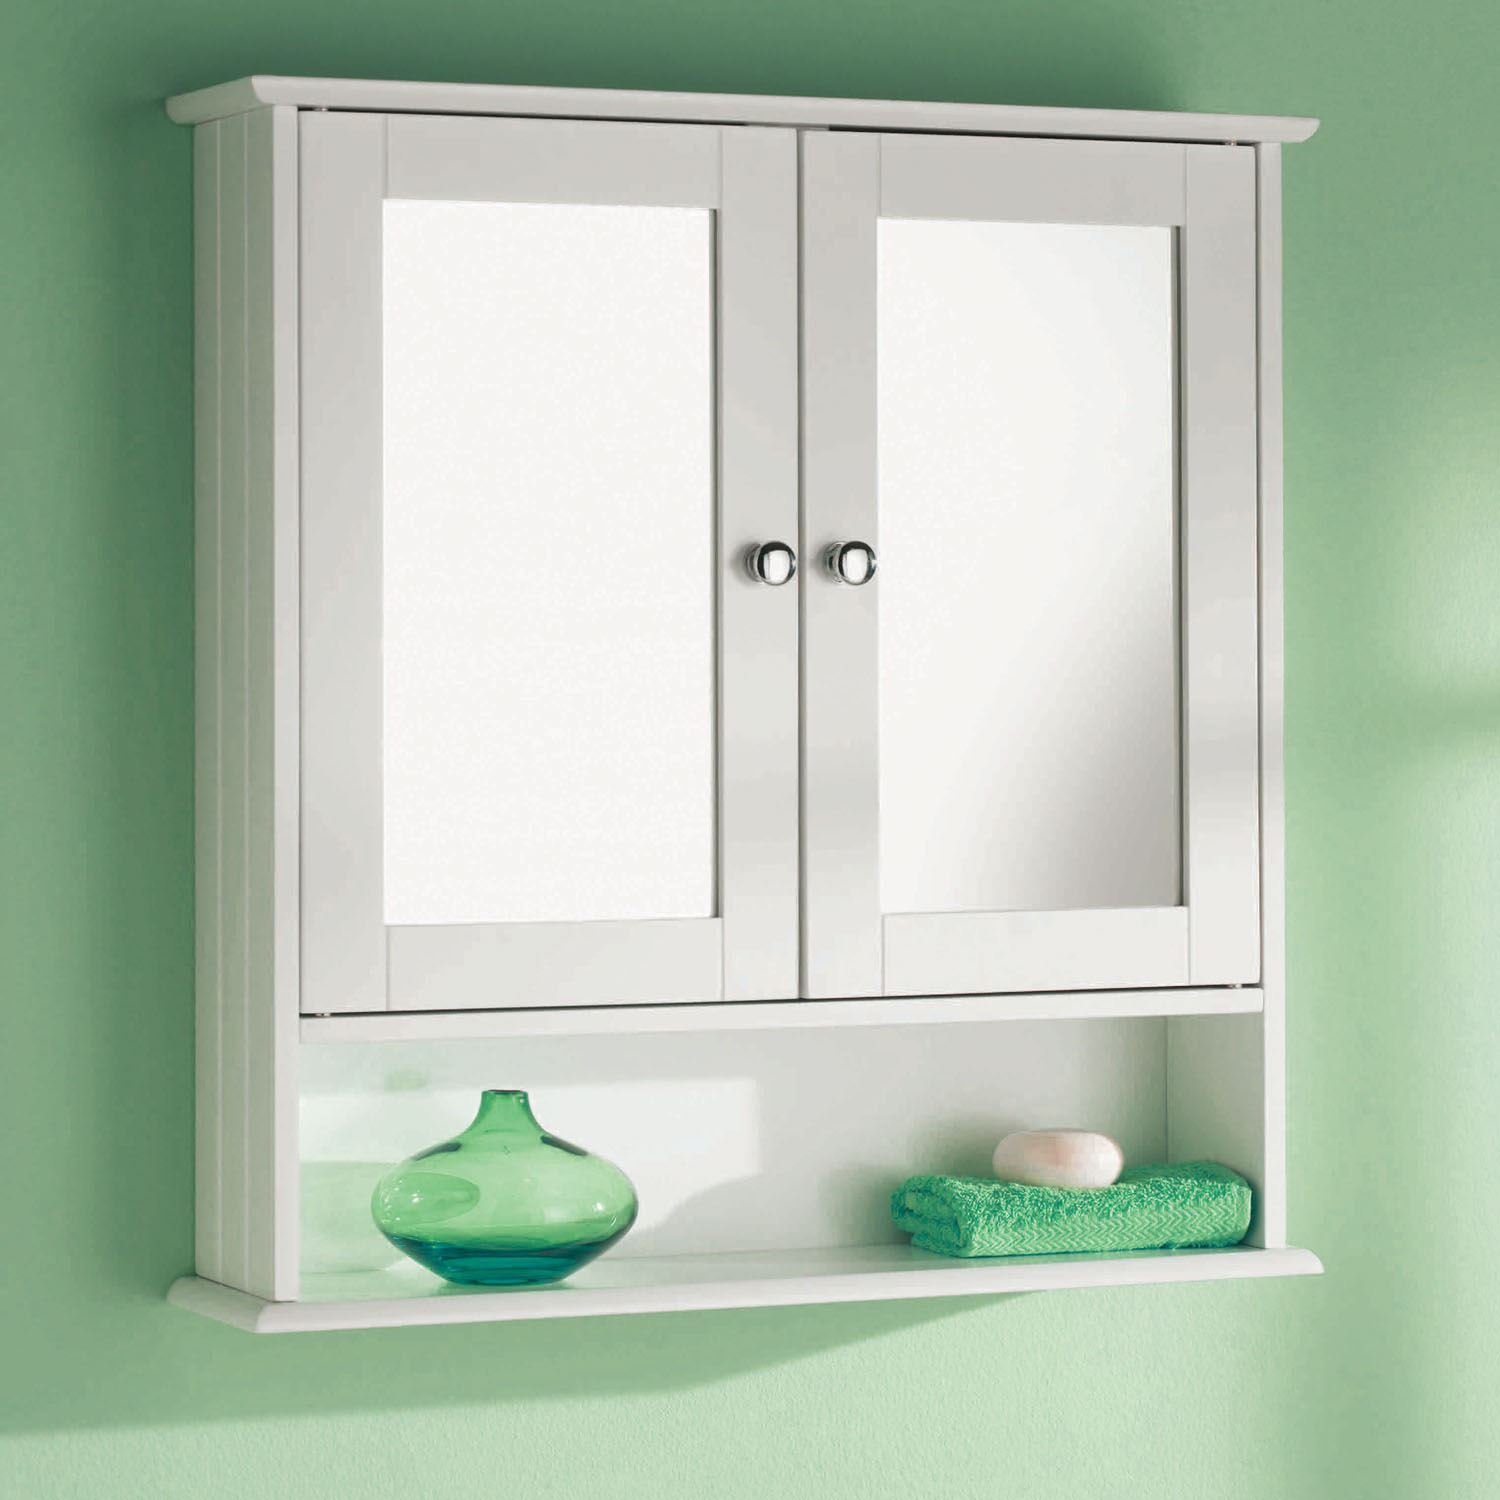 Double Door Mirror Shelf Wall Mounted Wood Storage Bathroom pertaining to size 1500 X 1500